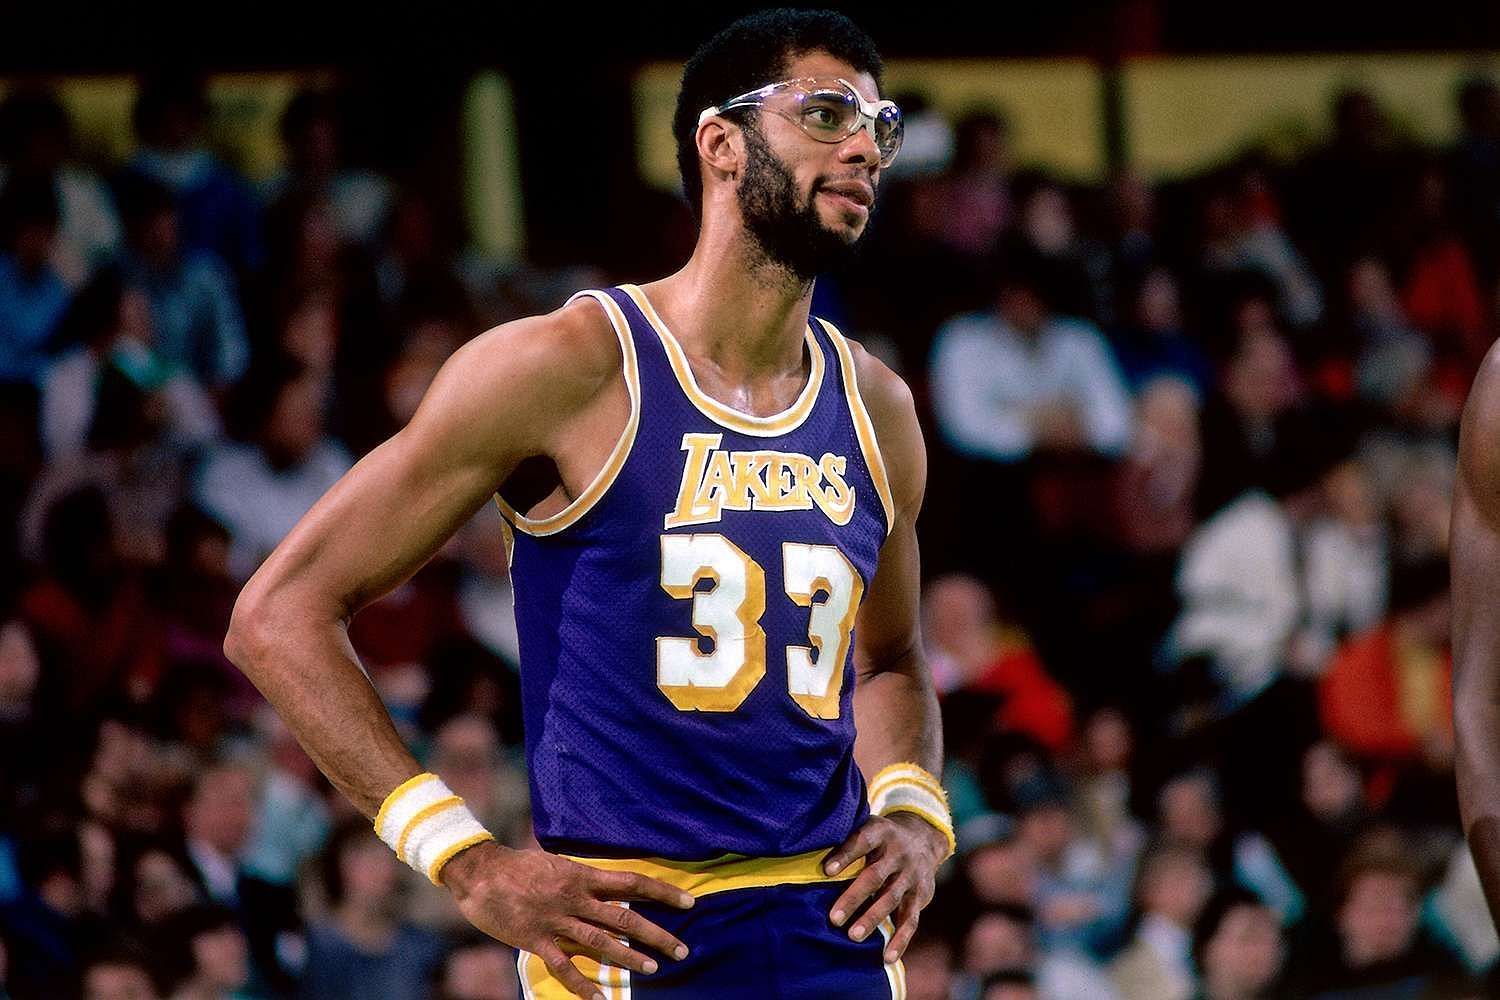 LA Lakers legendary center Kareem Abdul-Jabbar